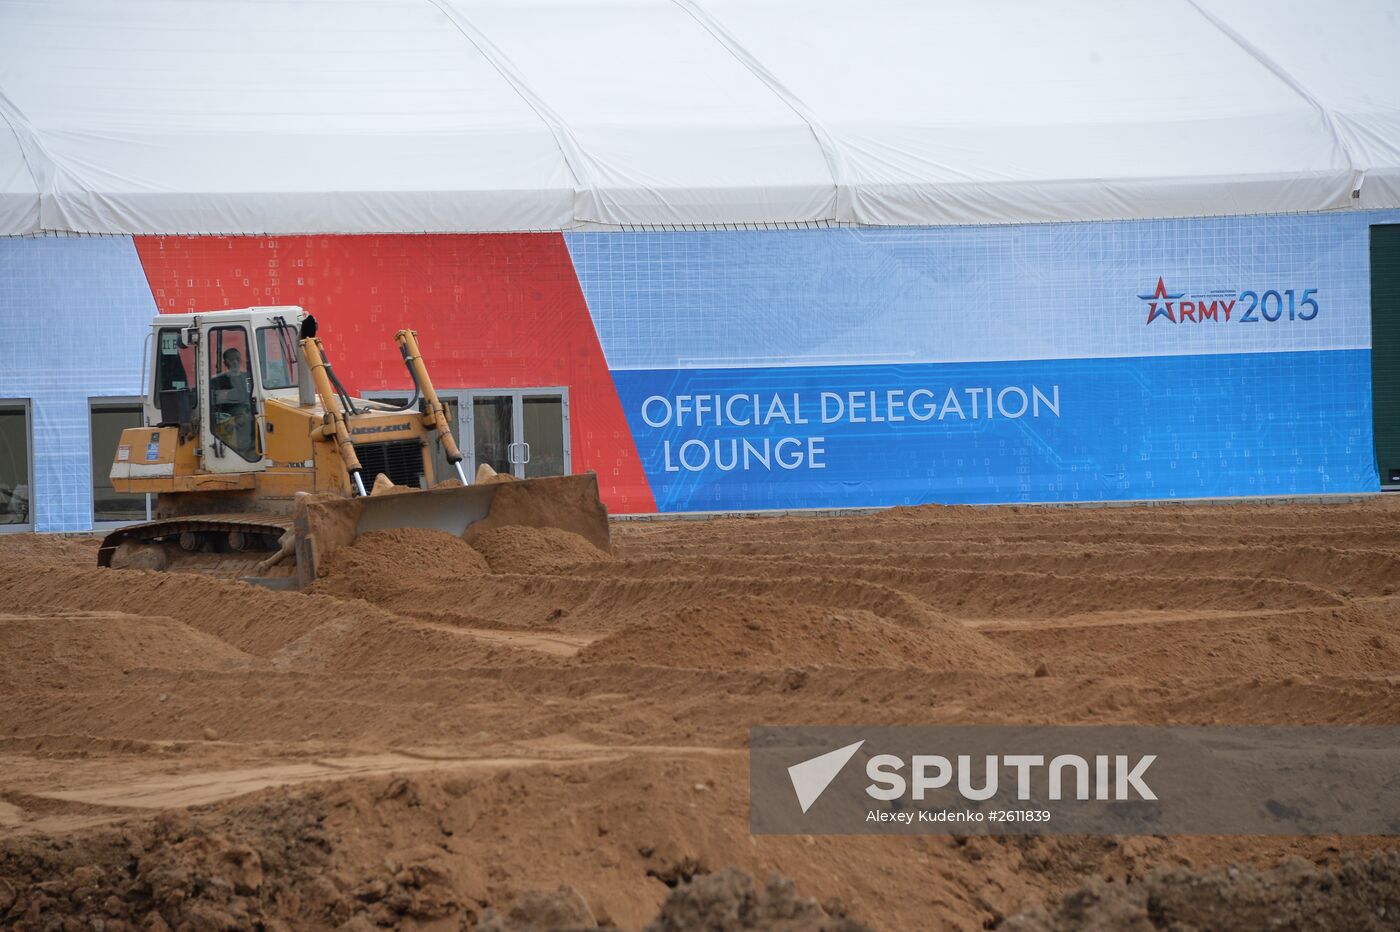 Patriot Park under construction to host Army 2015 Forum